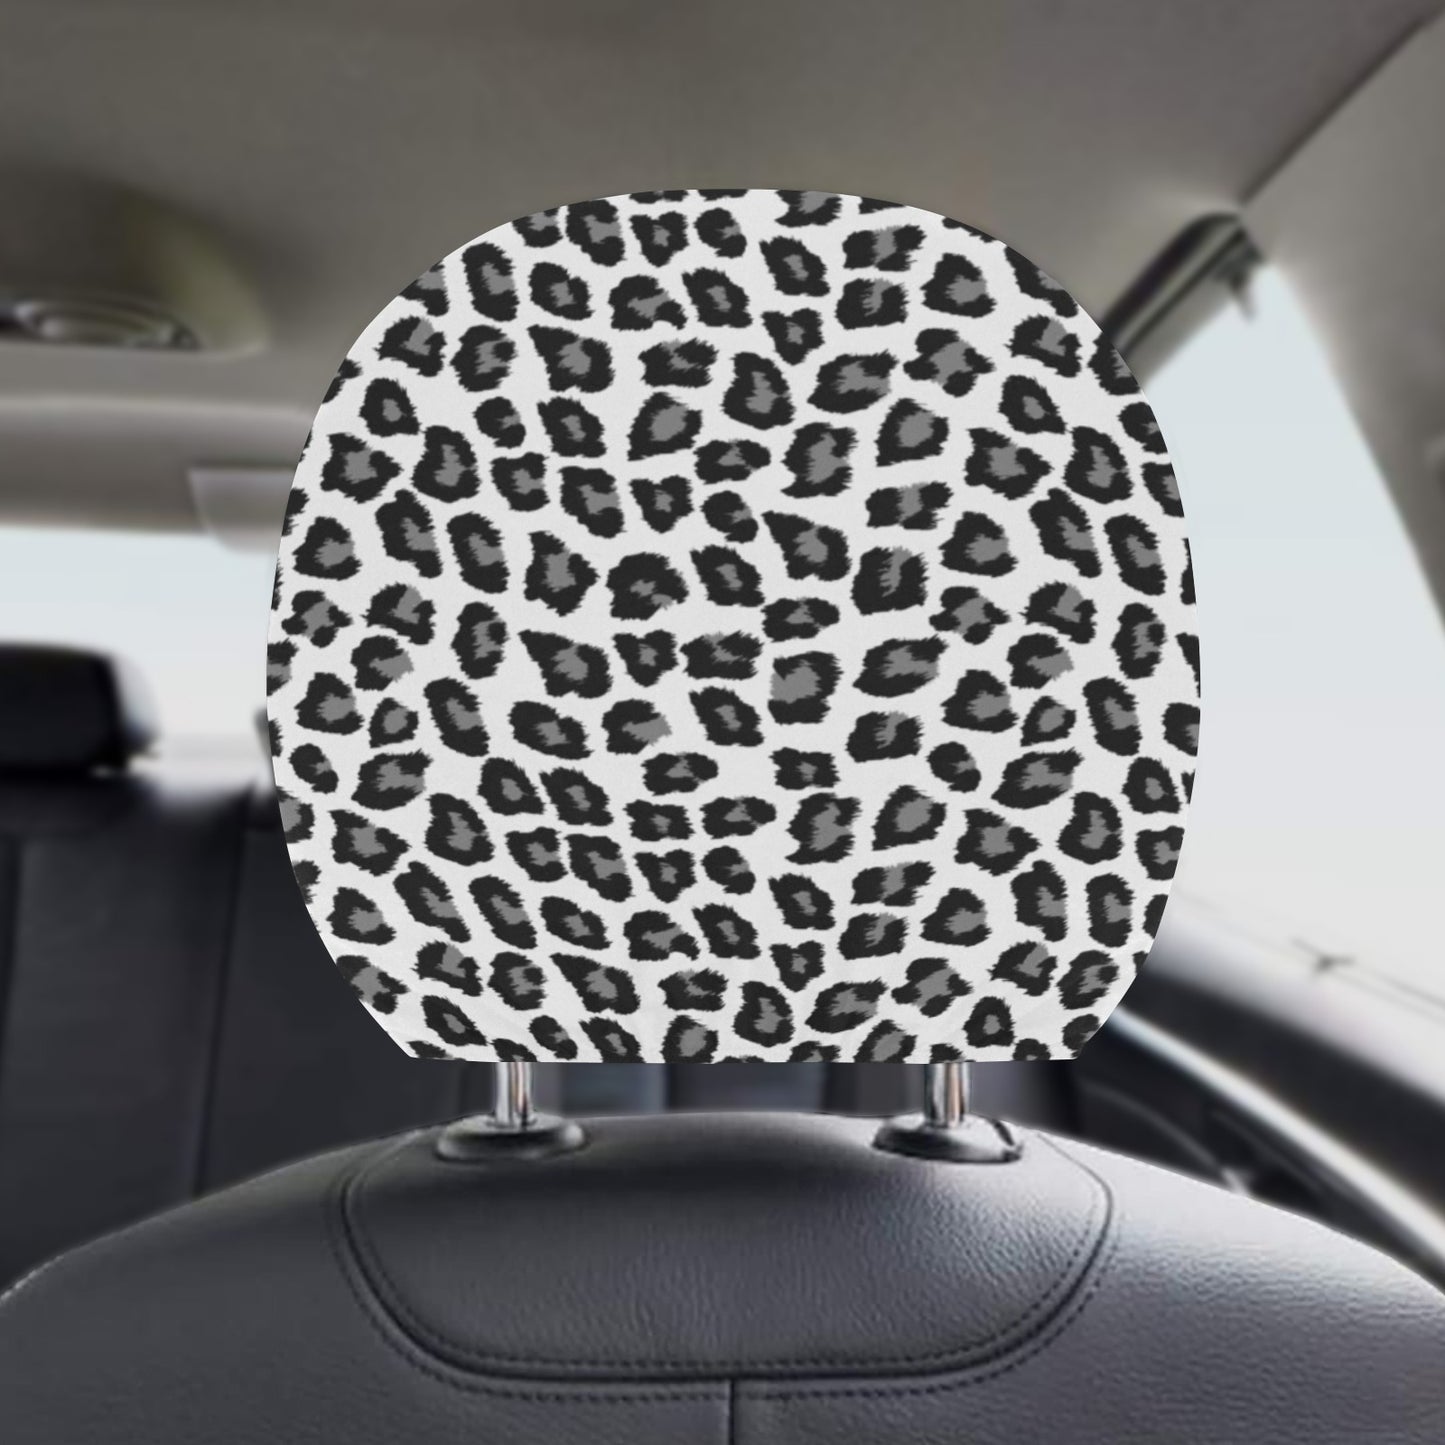 Snow Leopard Car Seat Headrest Cover (2pcs), Animal Print Black White Truck Suv Van Vehicle Auto Decoration Protector New Car Gift